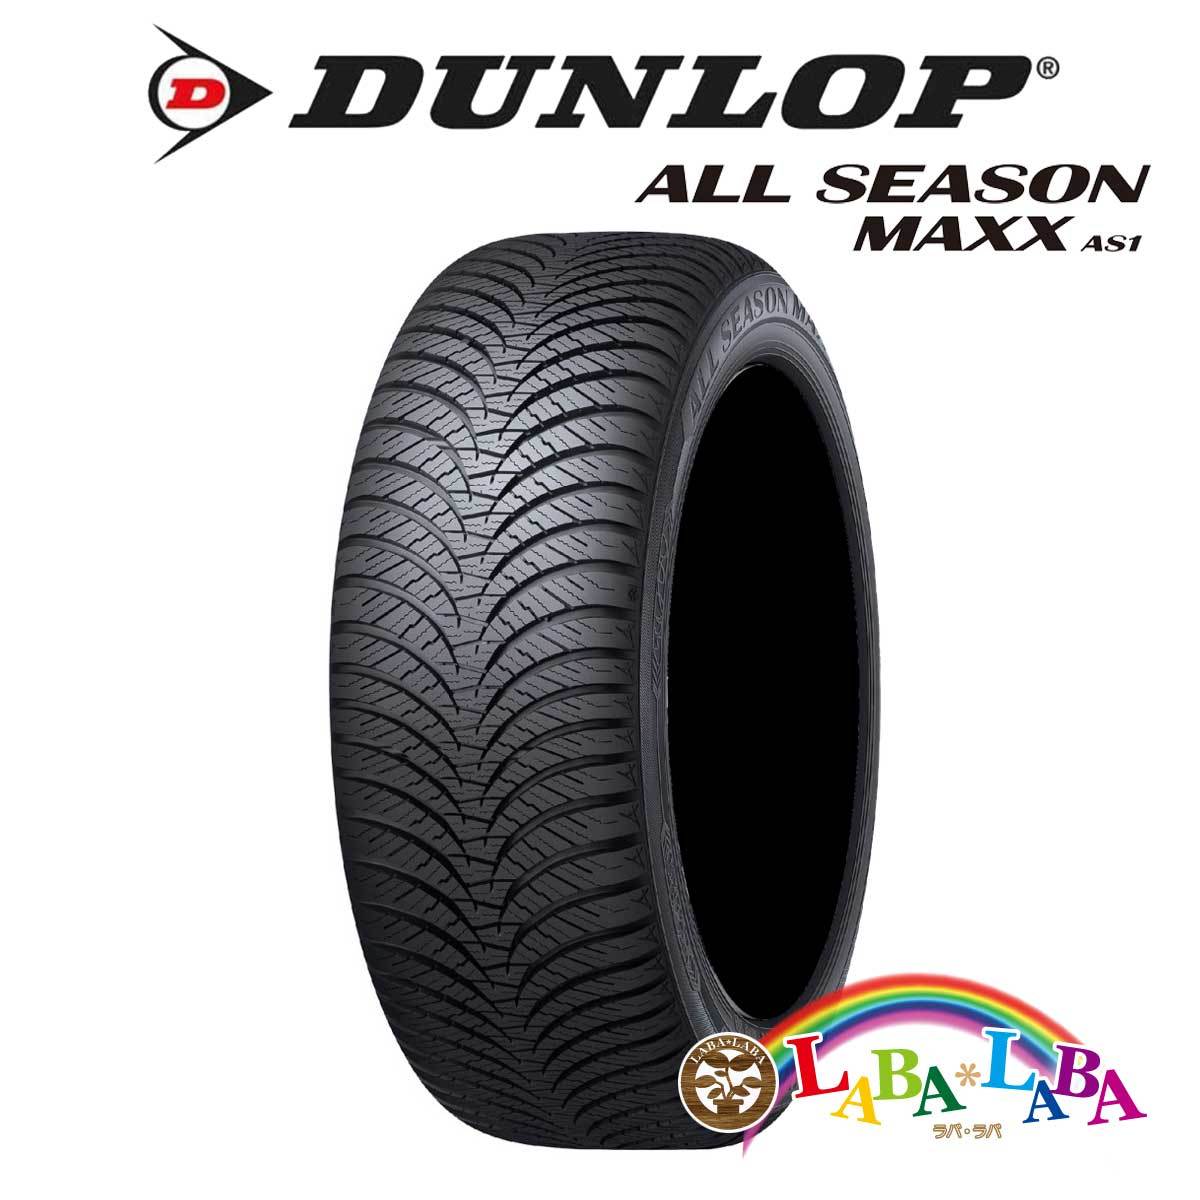 DUNLOP ALL SEASON MAXX AS1 185/65R15 88H タイヤ×4本セット ALL SEASON MAXX オールシーズンタイヤの商品画像